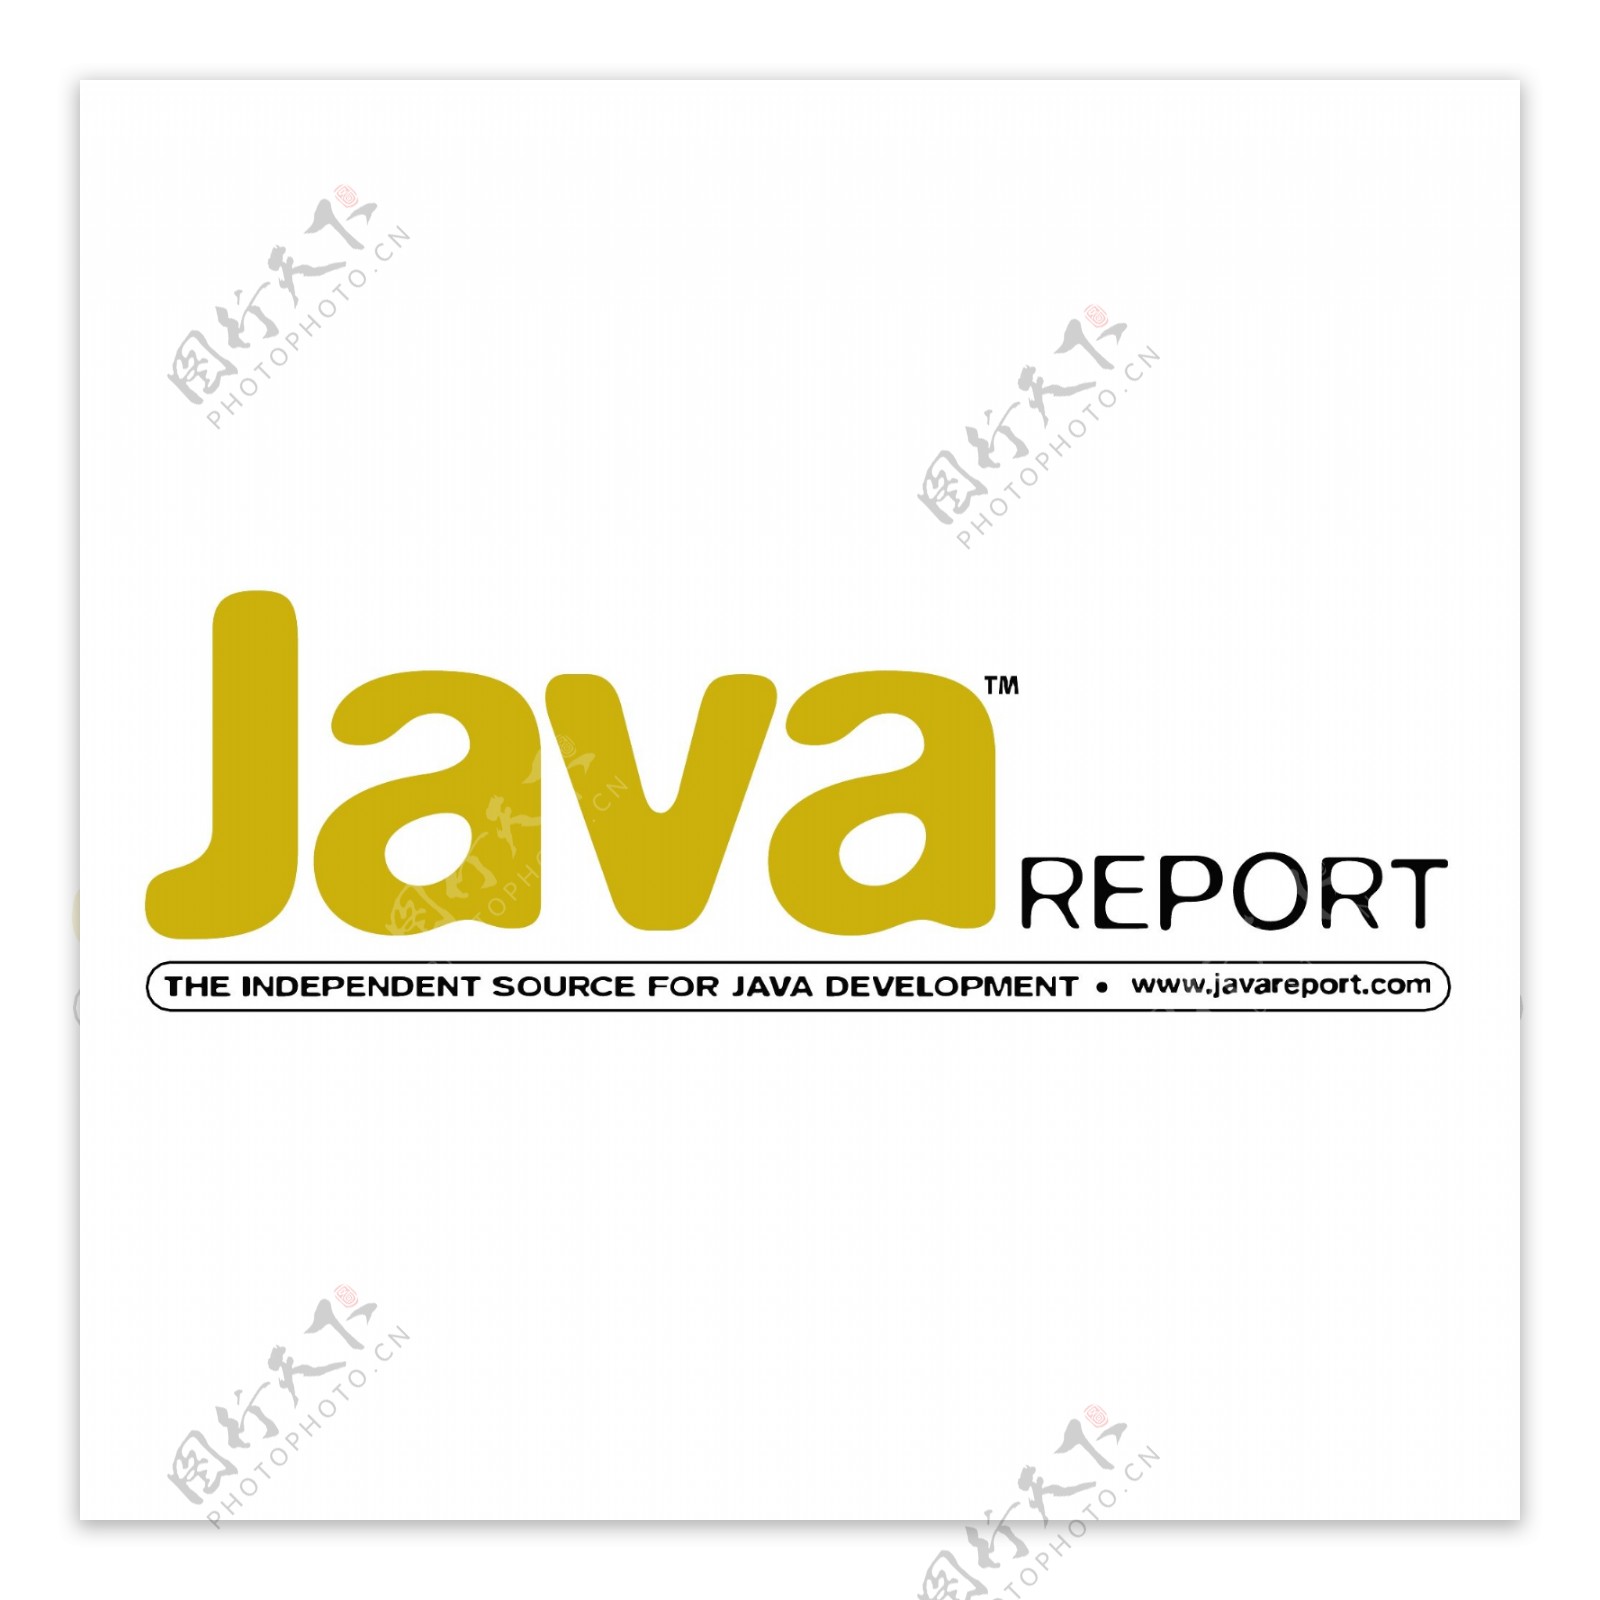 Java报告